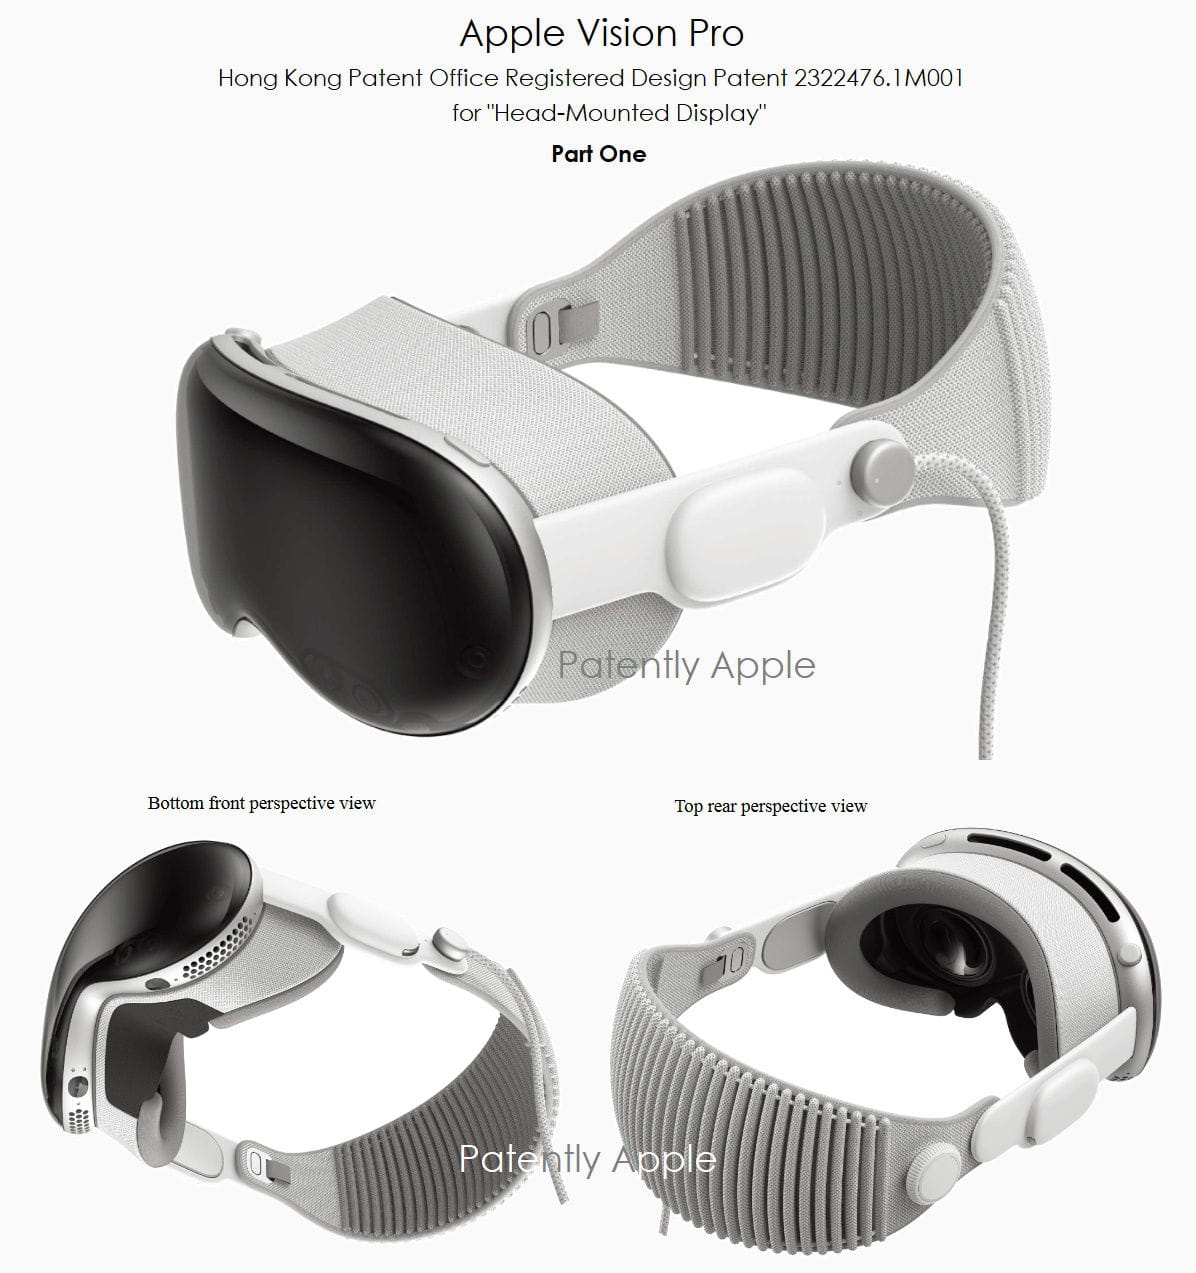 AppleVisionPro Patent 1